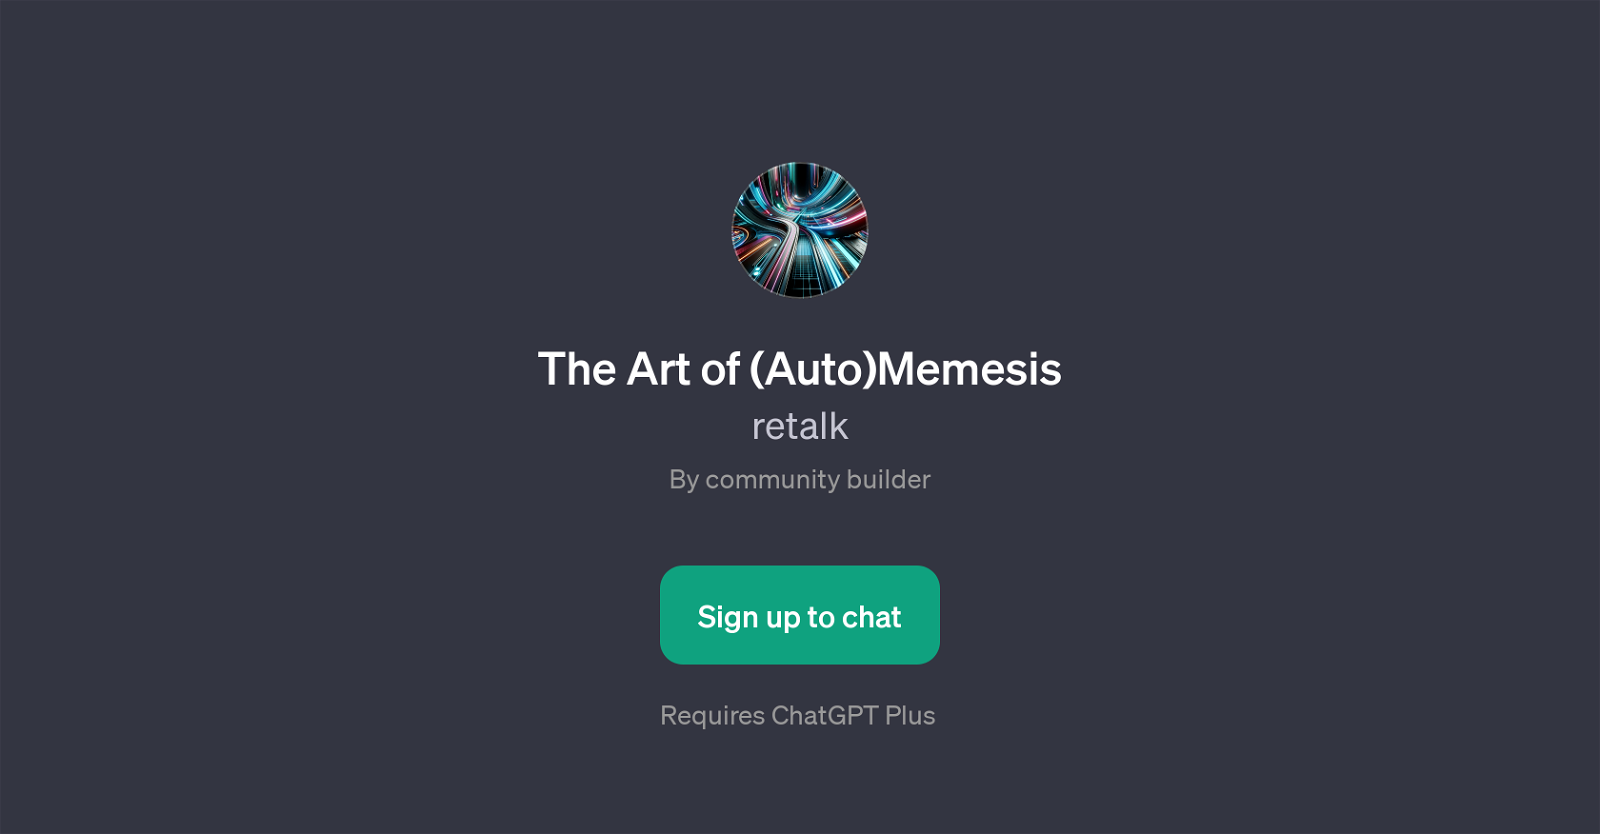 The Art of (Auto)Memesis website